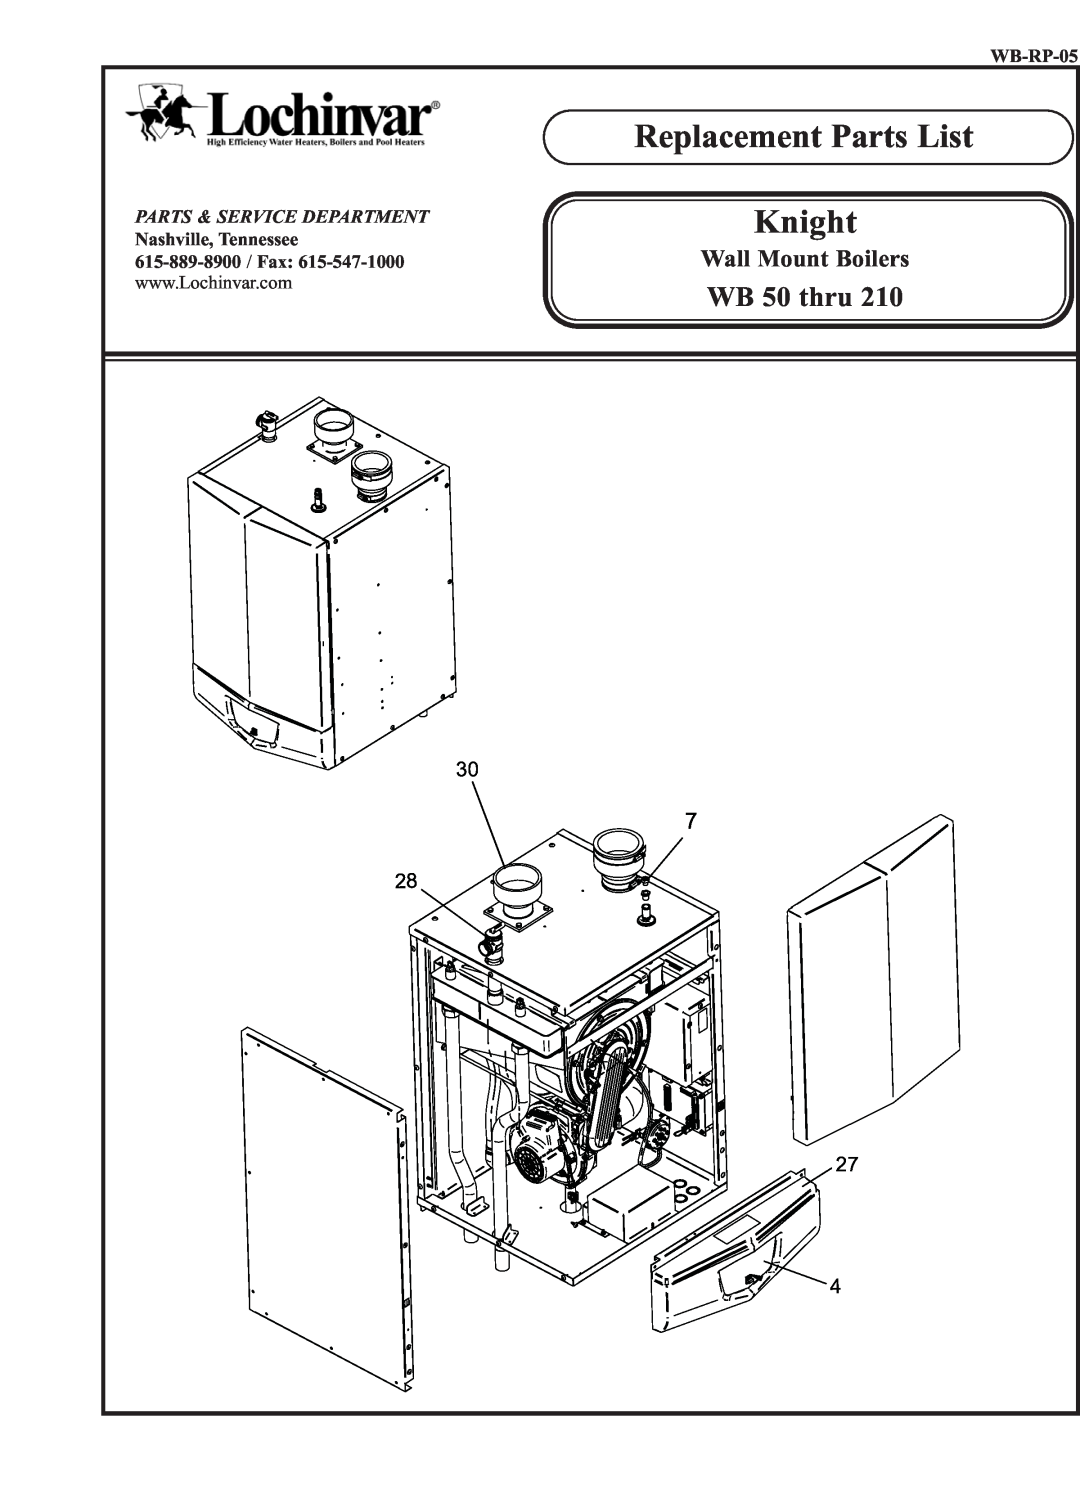 Lochinvar WB50 thru 210 manual Replacement Parts List, Knight, WB 50 thru, Wall Mount Boilers, WB-RP-05 